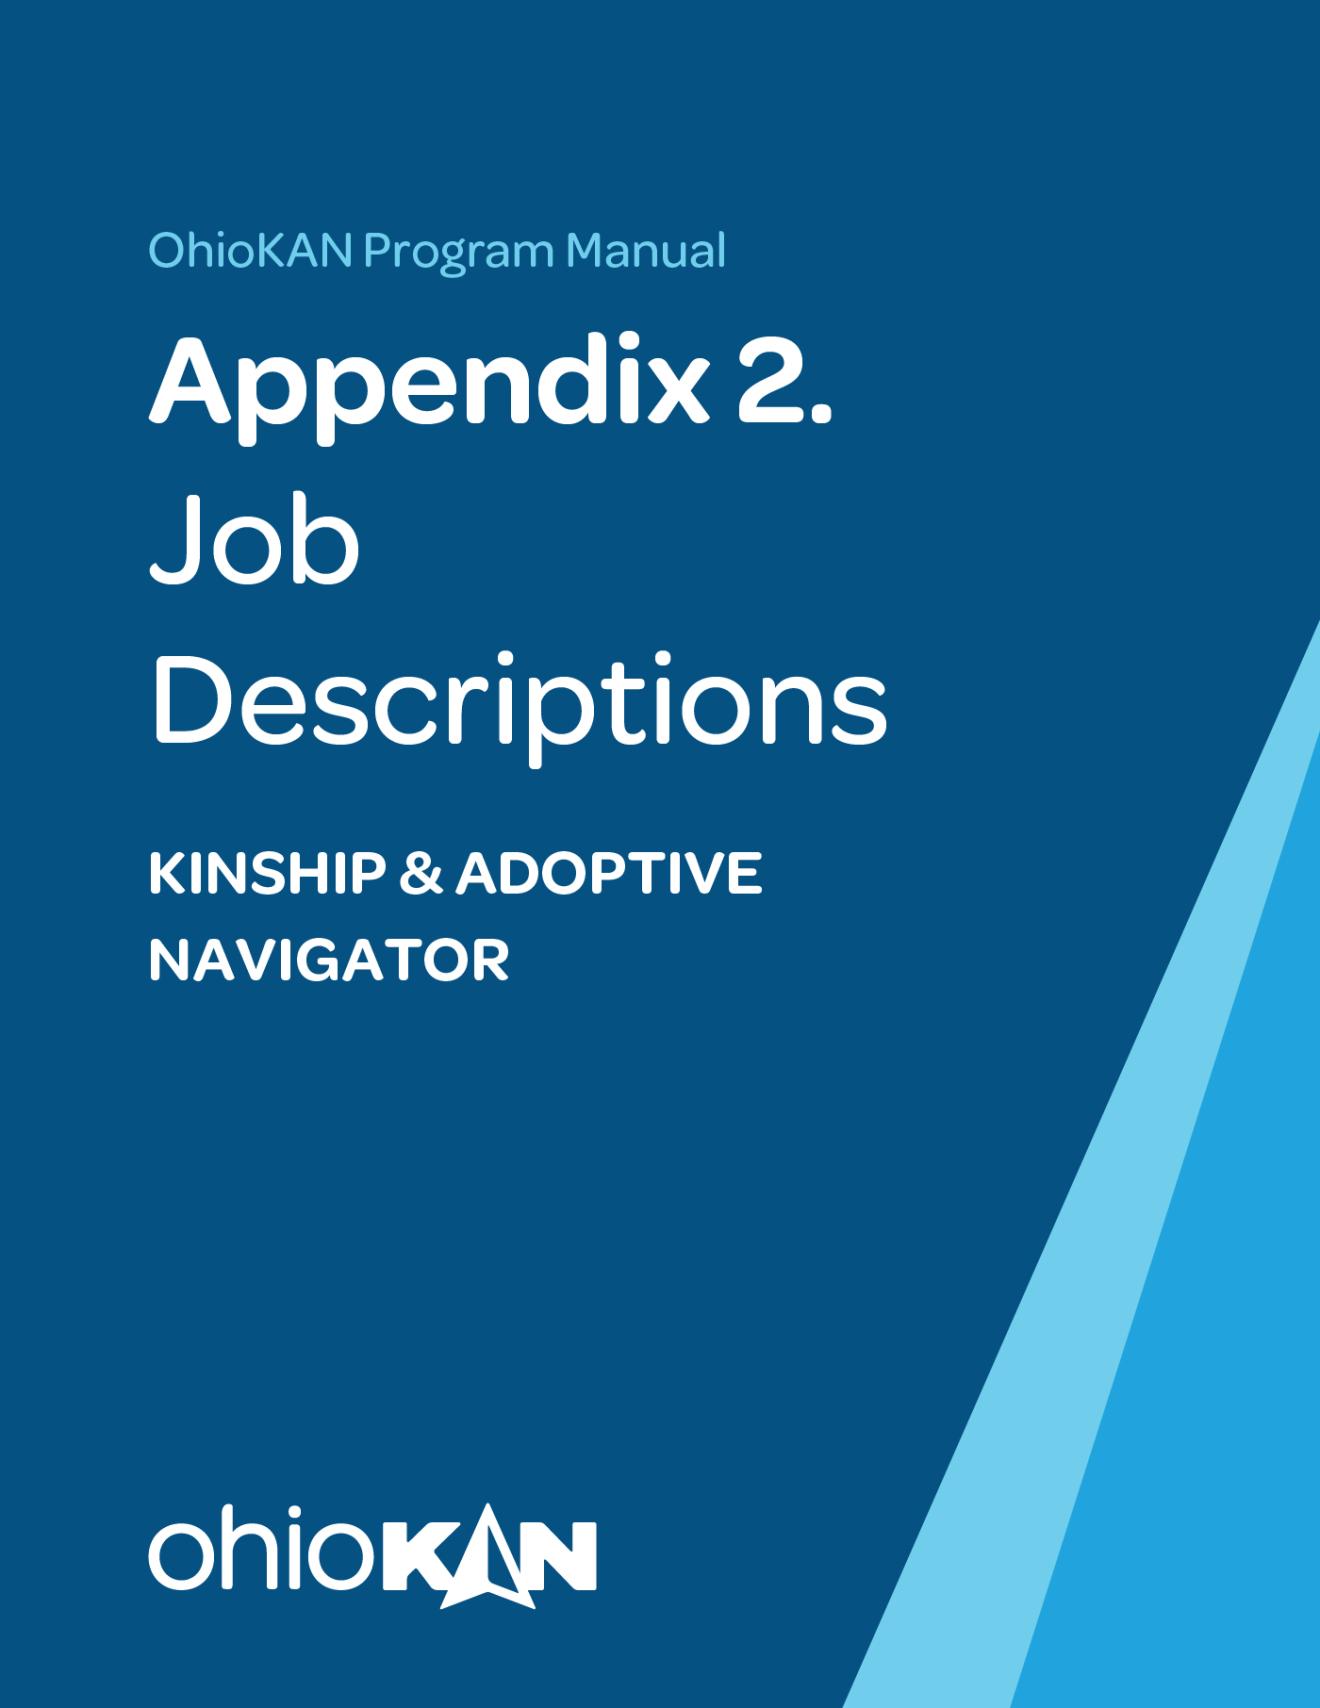 Appendix 2 Kinship & Adoptive Navigator